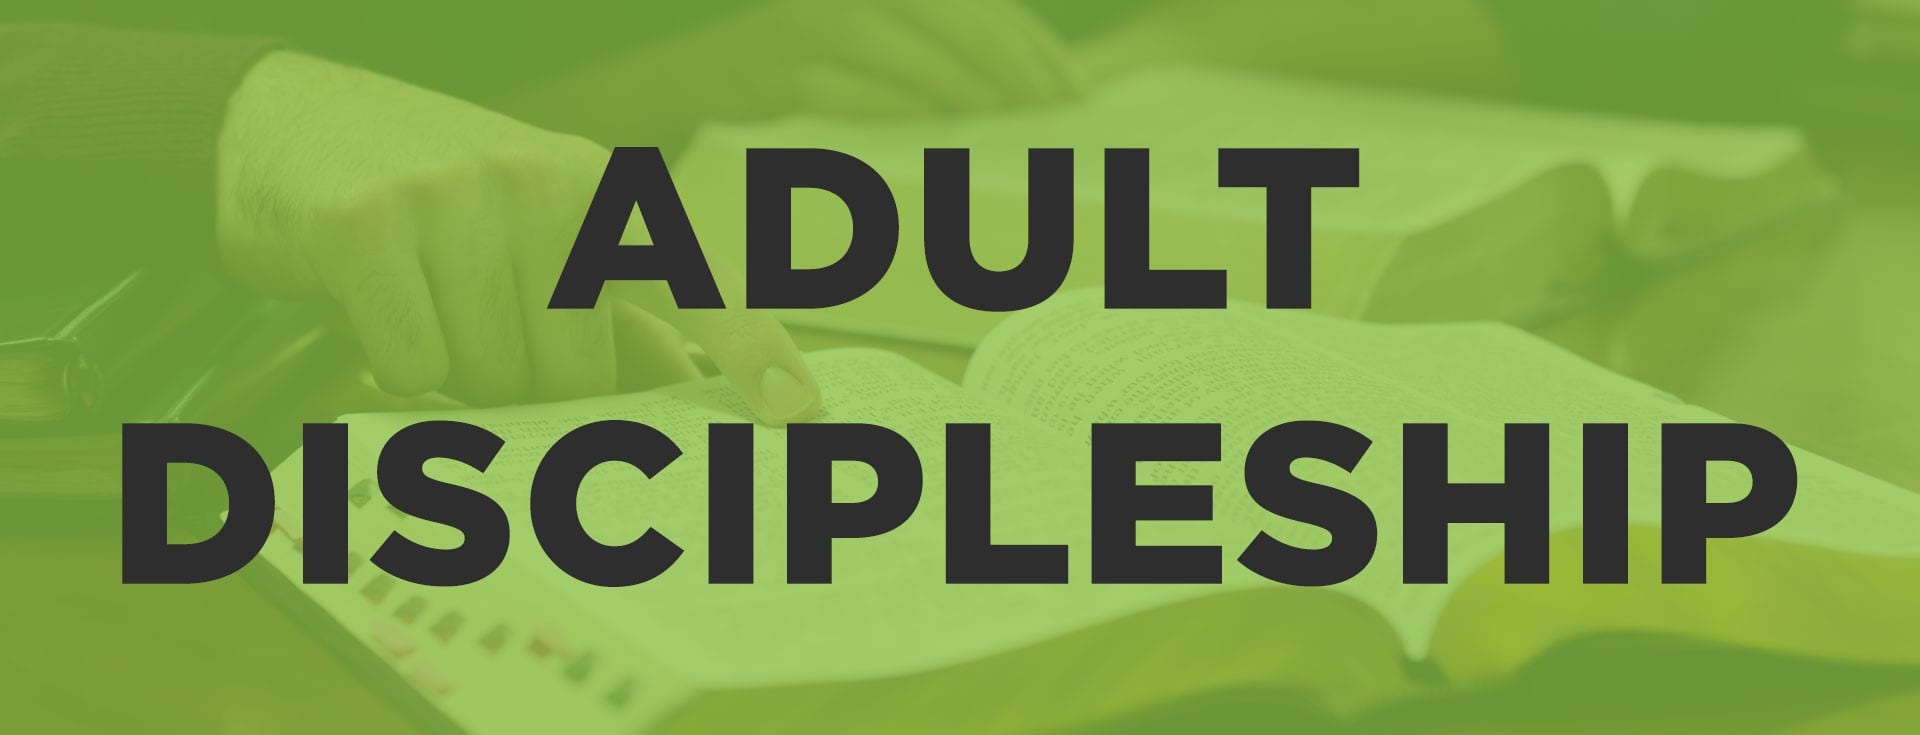 Adult Discipleship